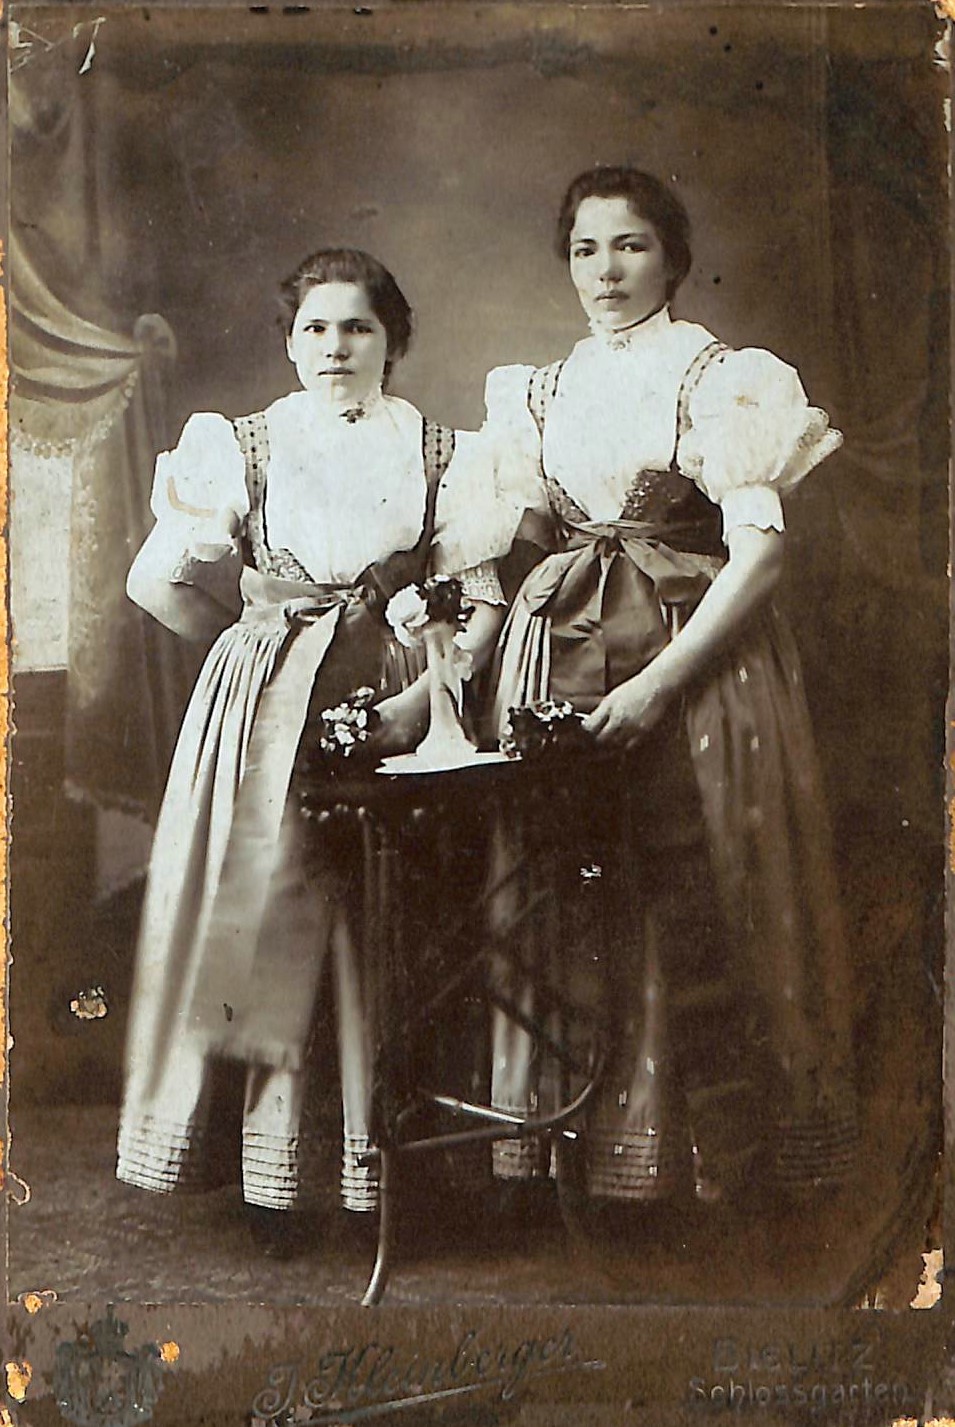 Anna i Zuzanna Mrózek c 1900